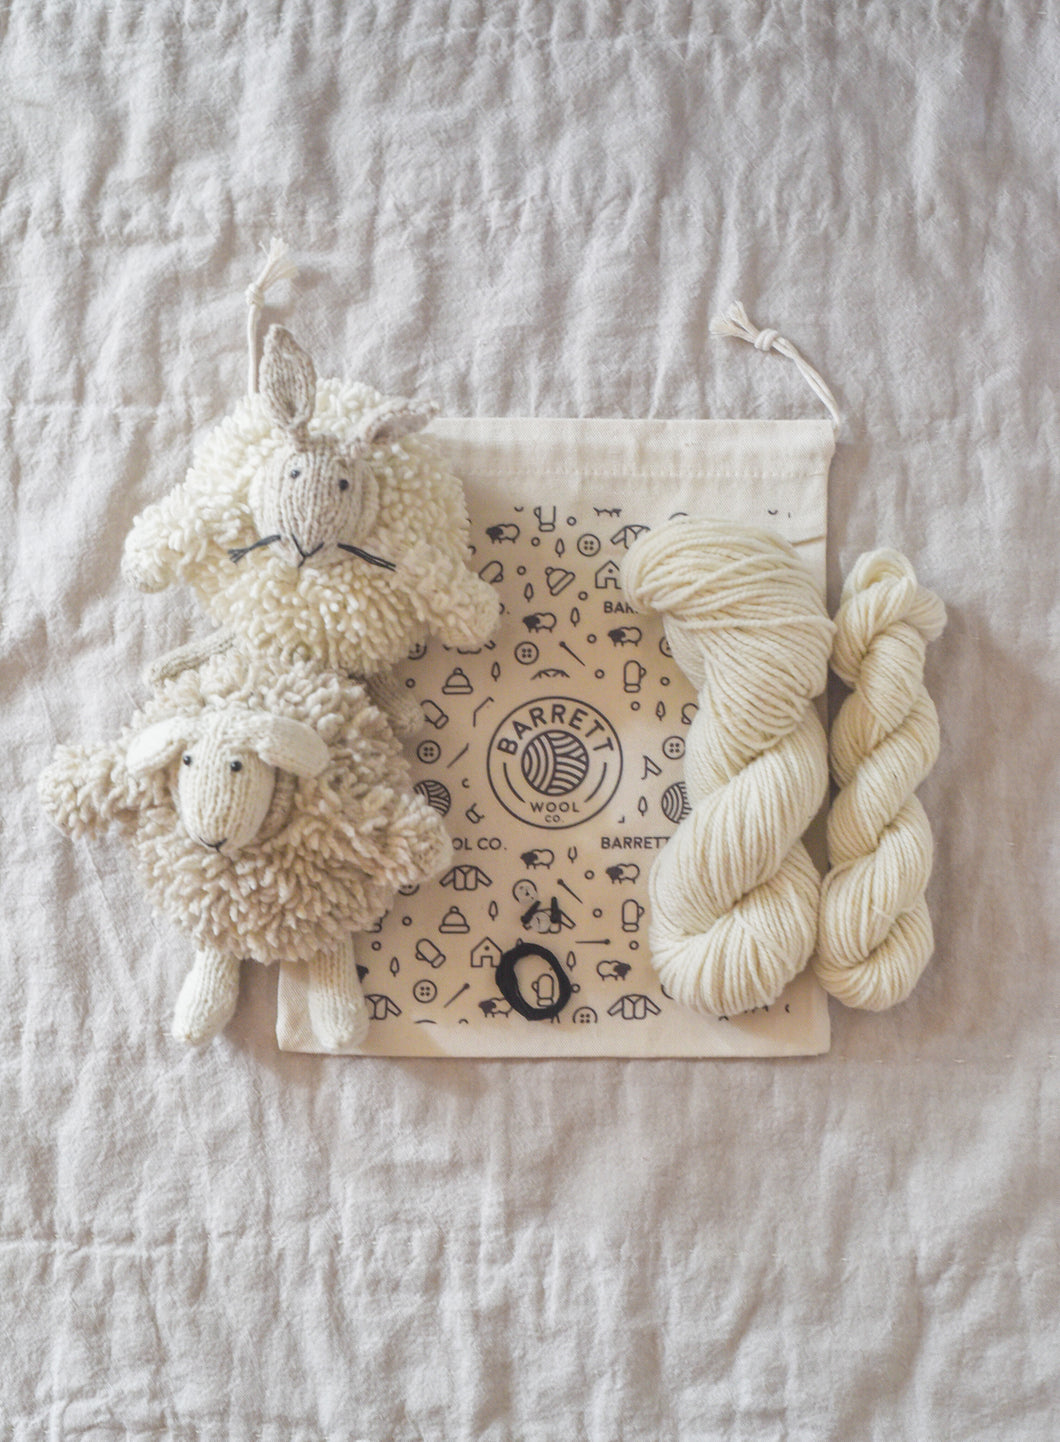 Wooly Sheep + Bunny Kit